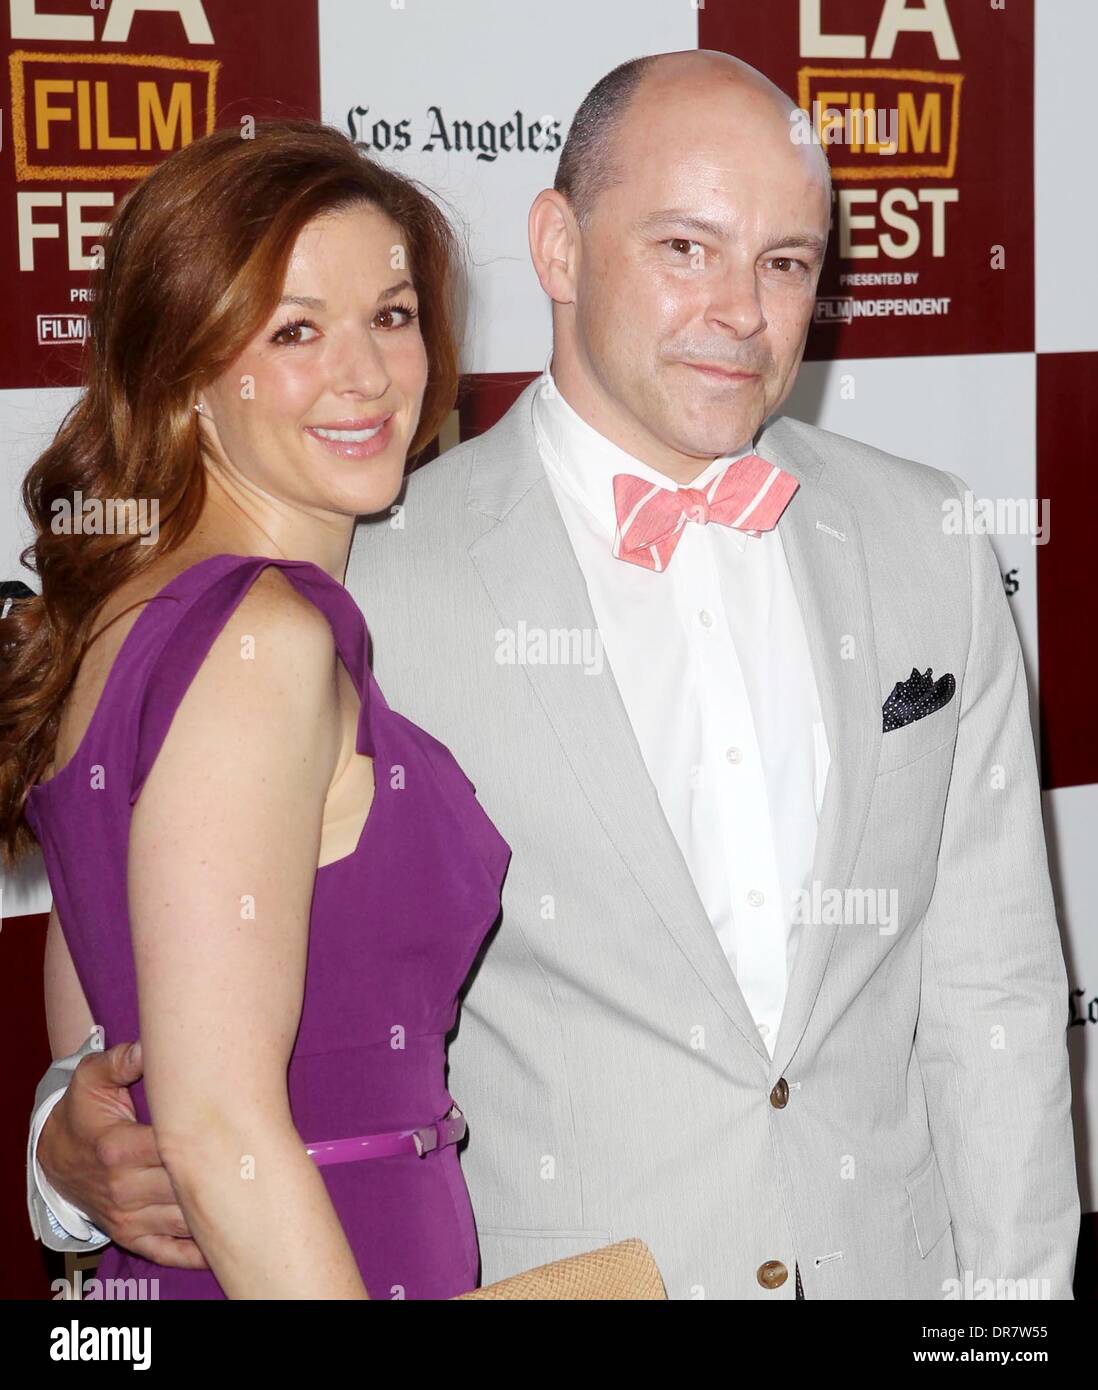 Rob Corddry and wife Sandra Corddry 2012 Los Angeles Film Festival premiere  of 'Seeking a Friend